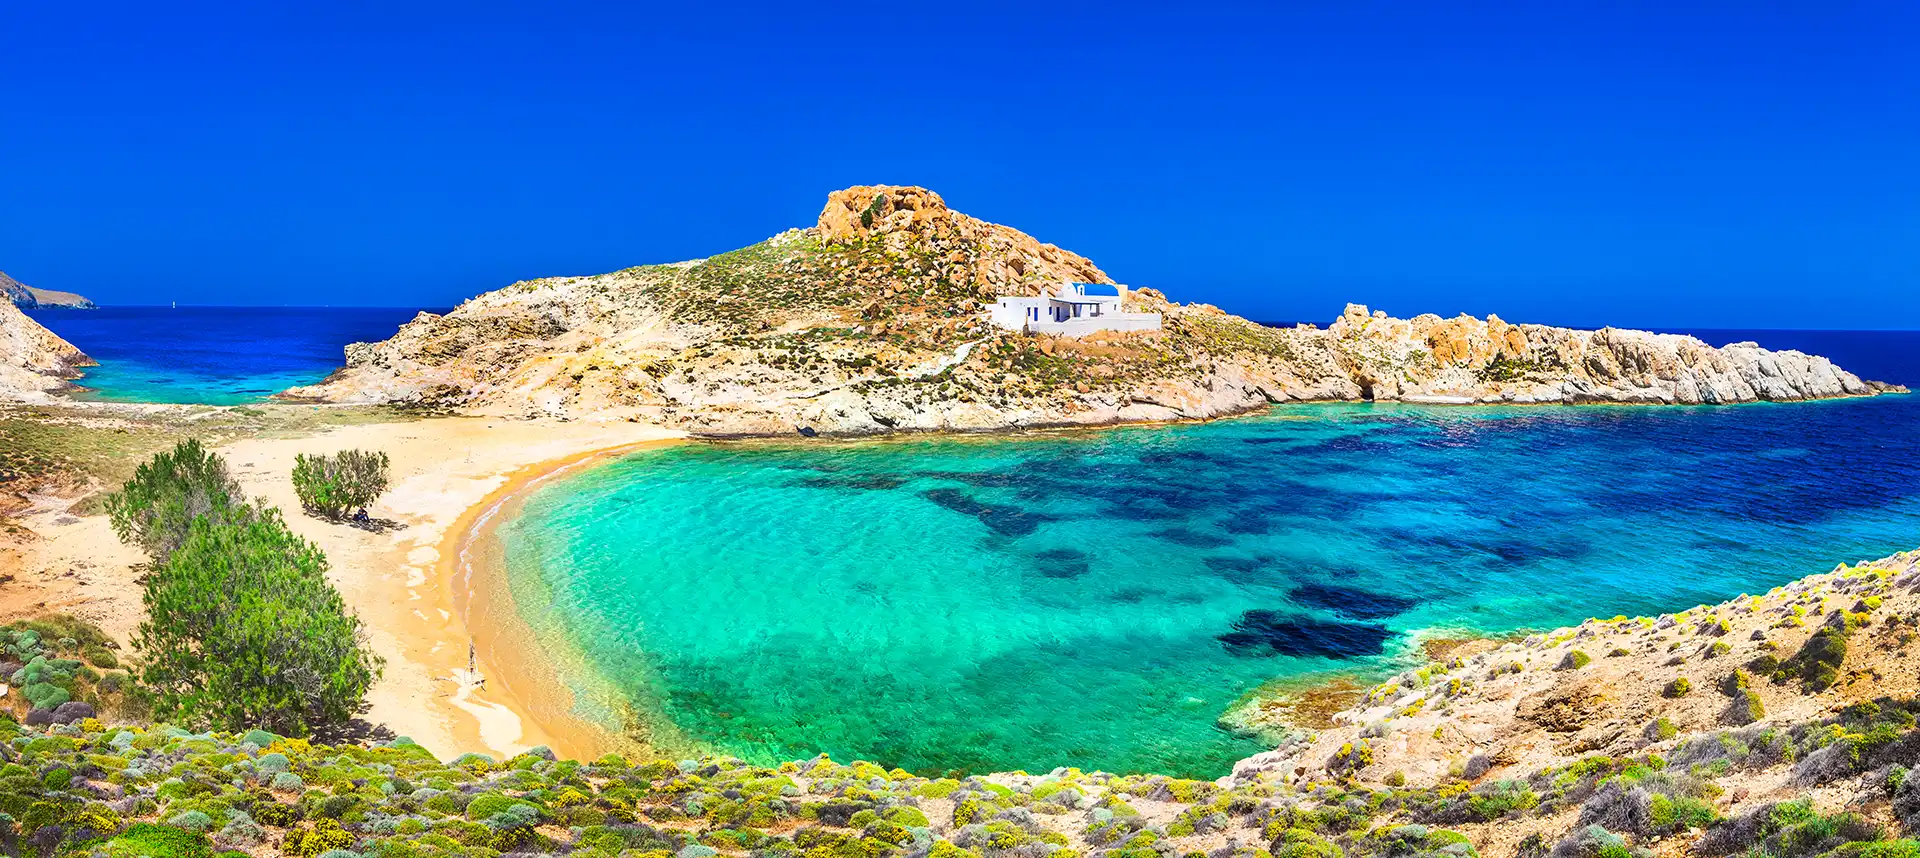 beautiful beaches of Greece, Serifos island. Cyclades